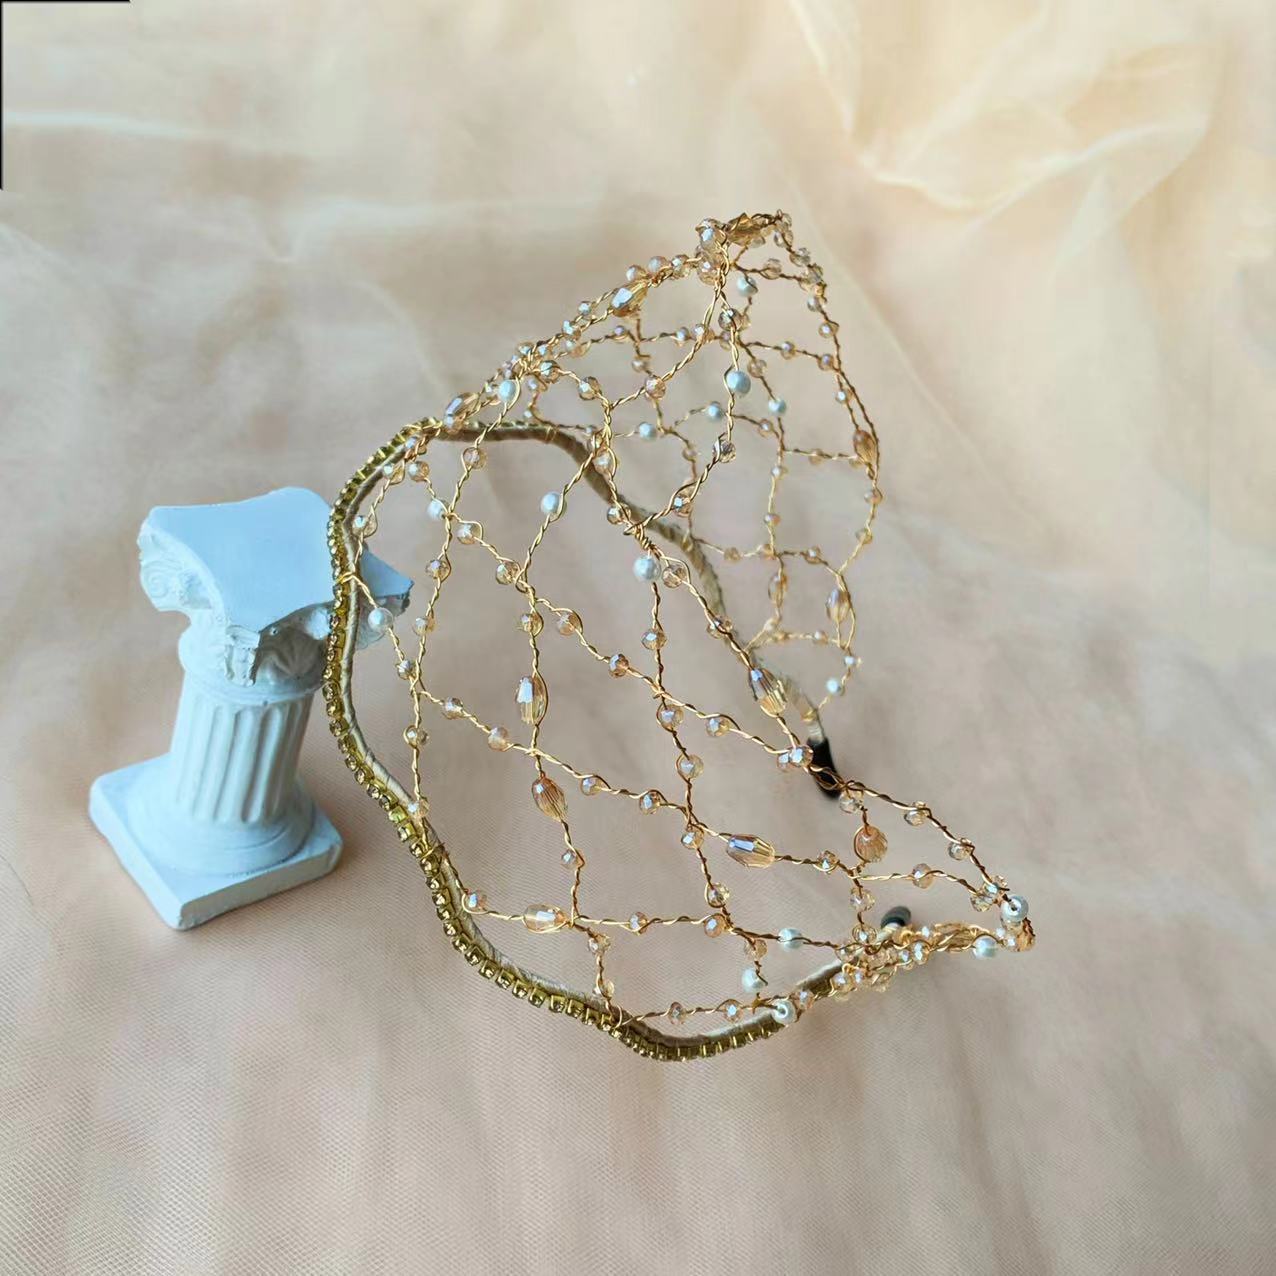 Handmade Knitted Crystal Beads Headband for Bride - SHEFAV